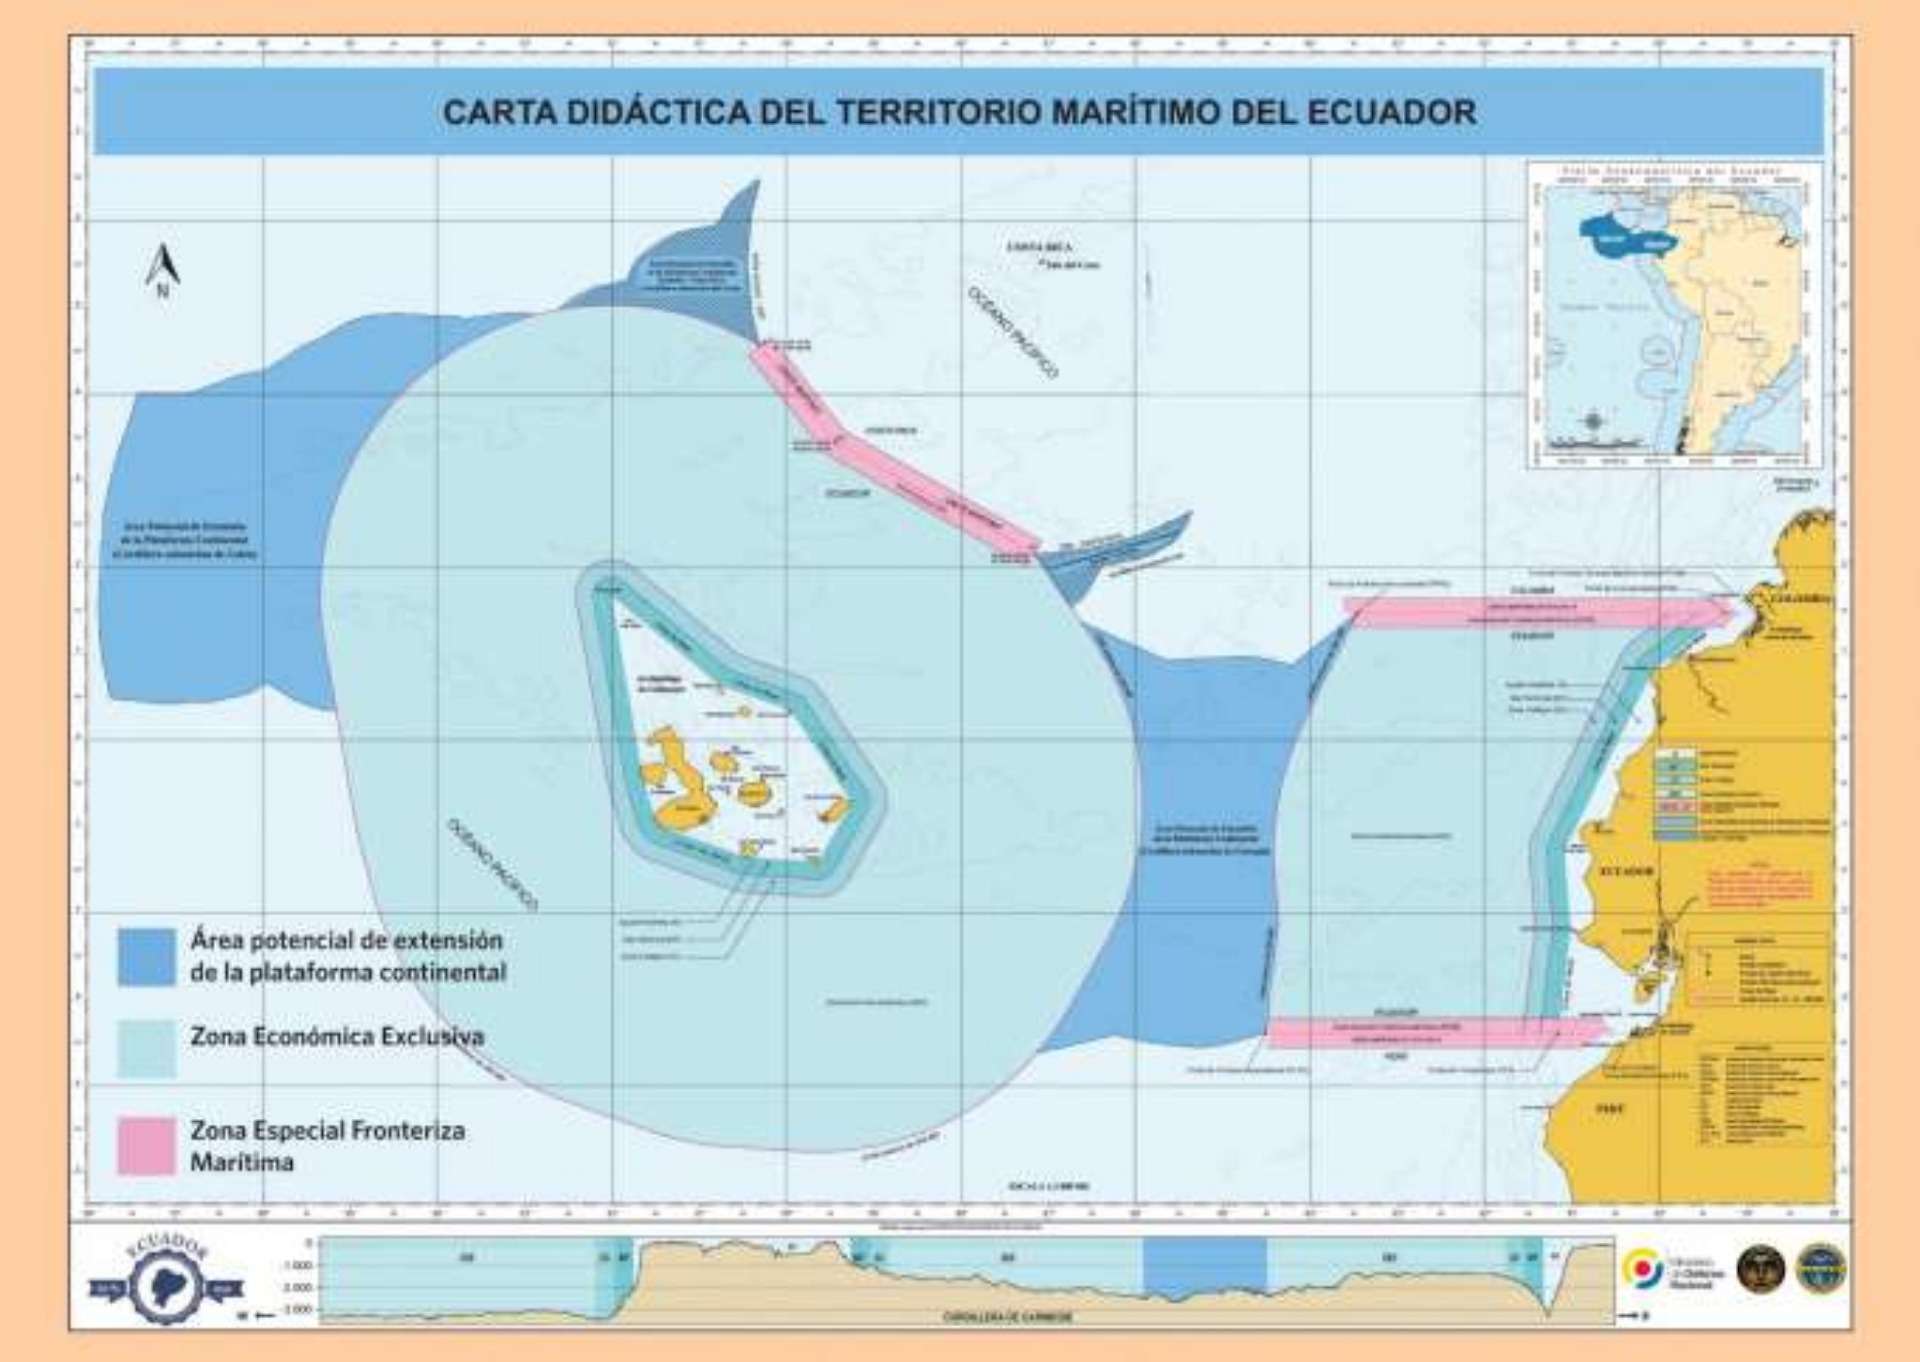 Ecuador and Galapagos marine Territory